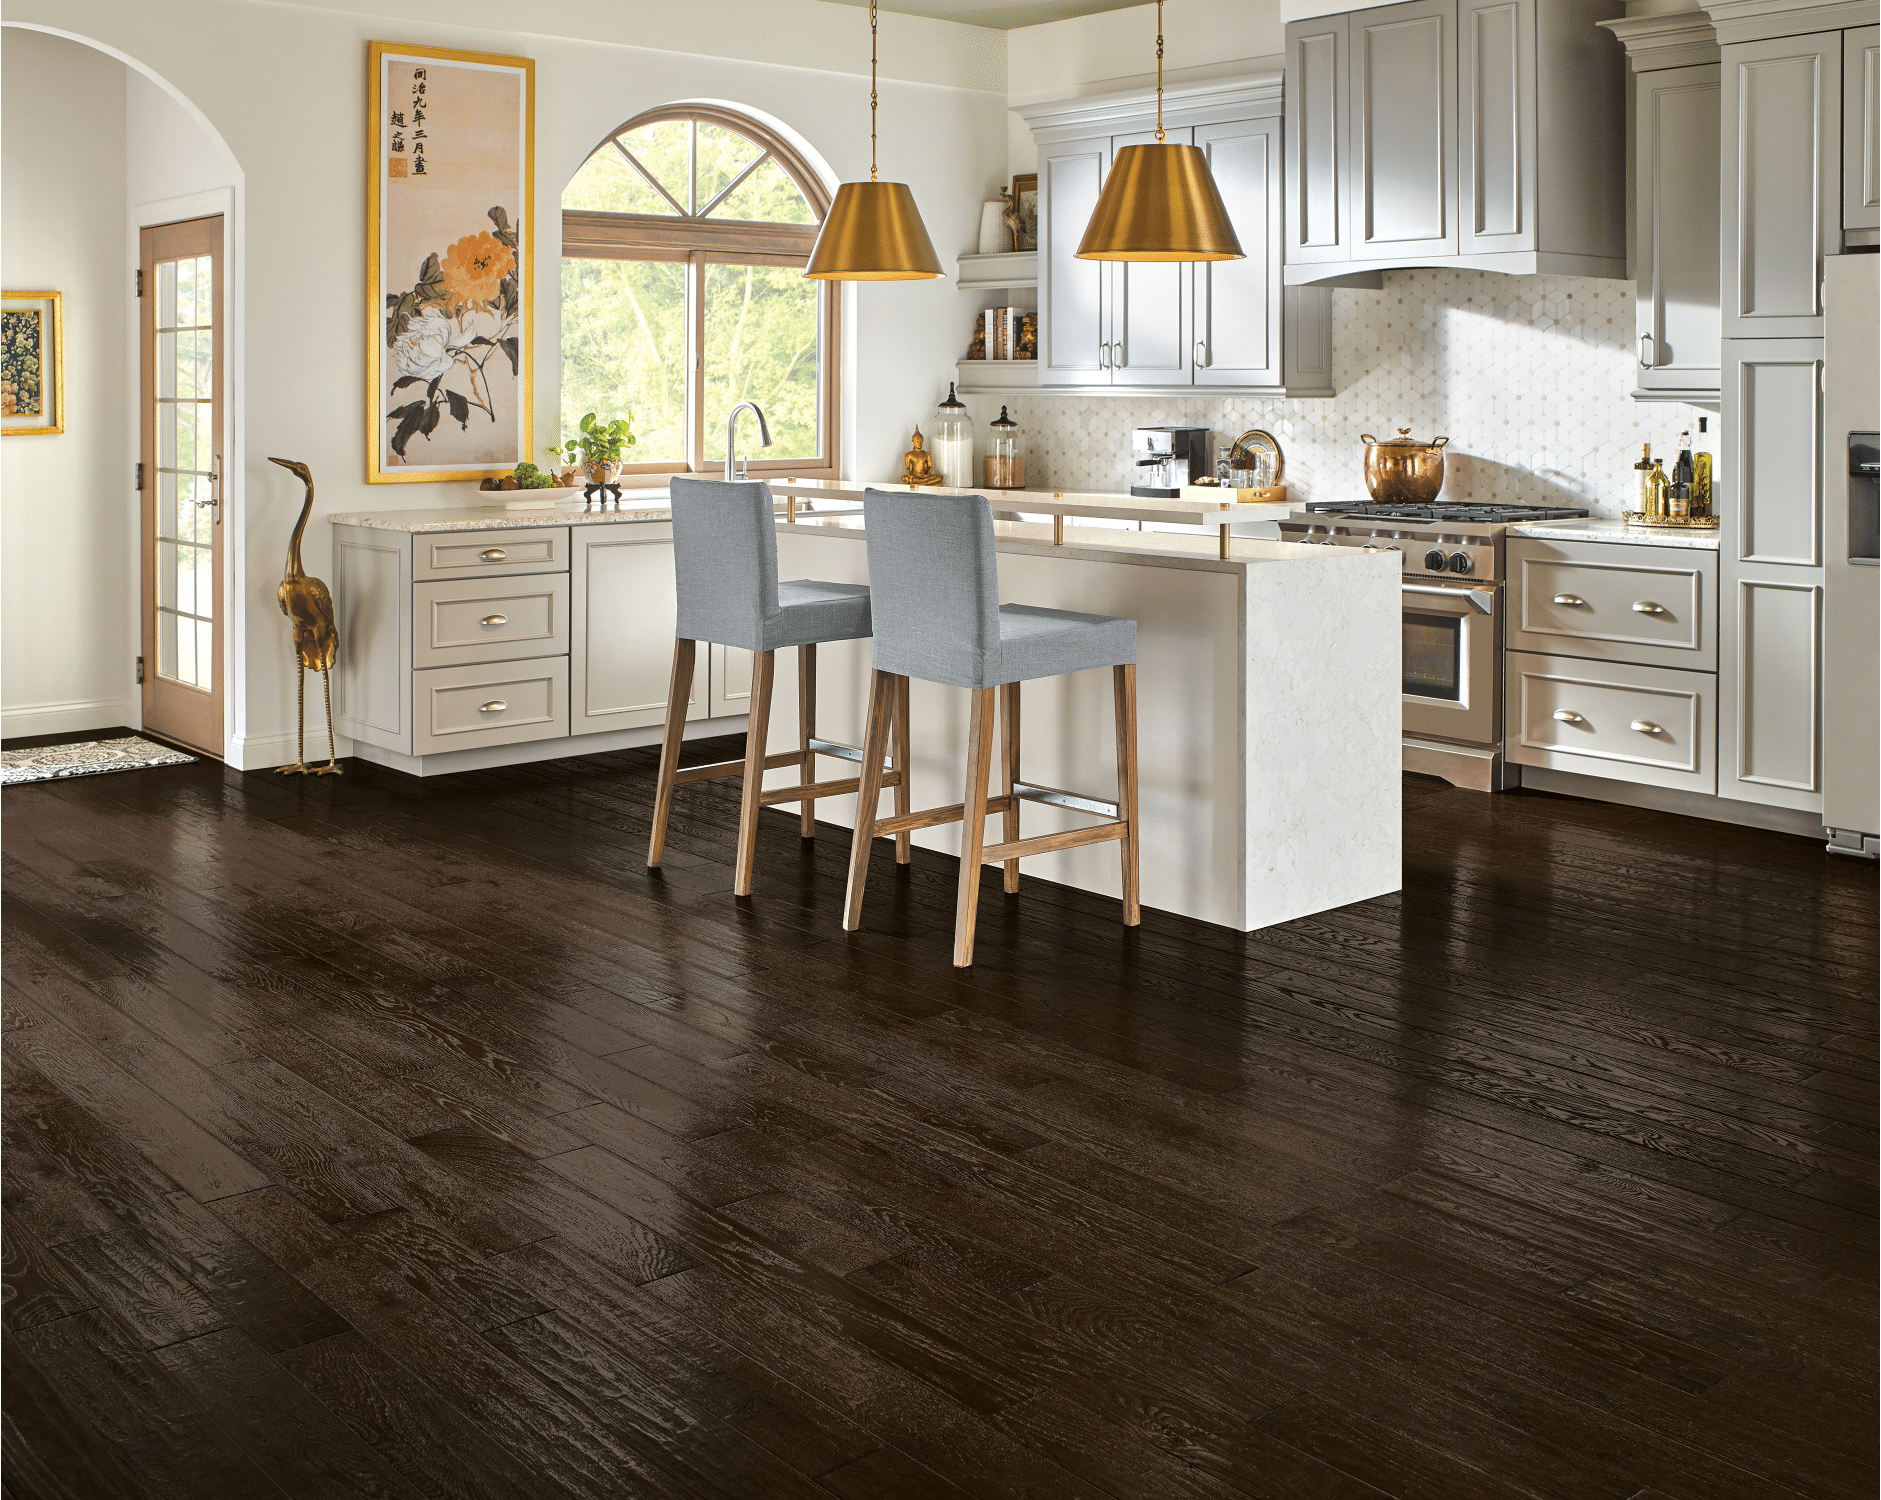 A kitchen with dark luxury vinyl plank floors.